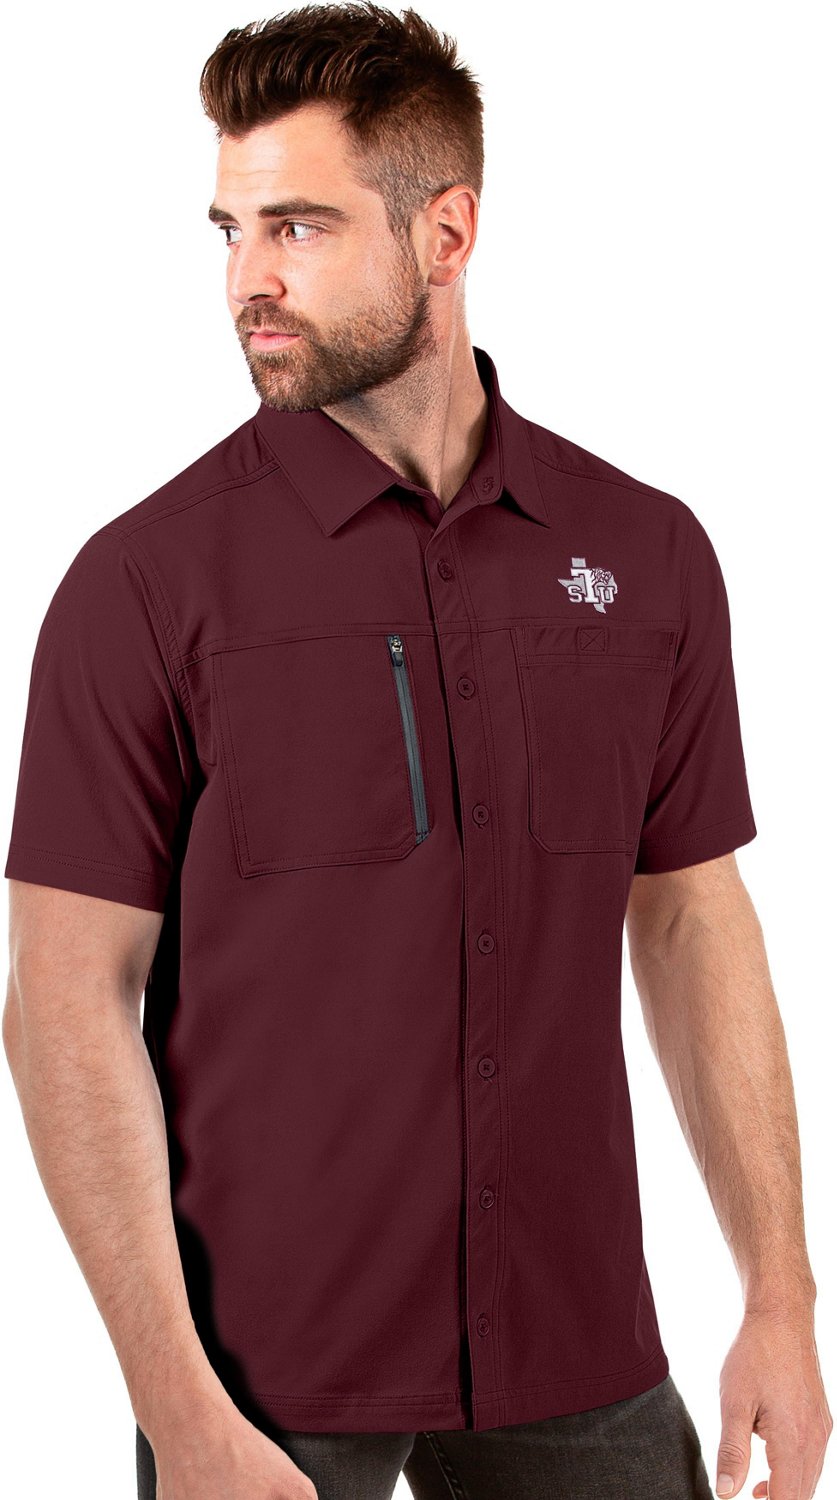 Academy Sports + Outdoors Antigua Men's Texas Southern University Kickoff  Limited Edition Woven Fishing Shirt